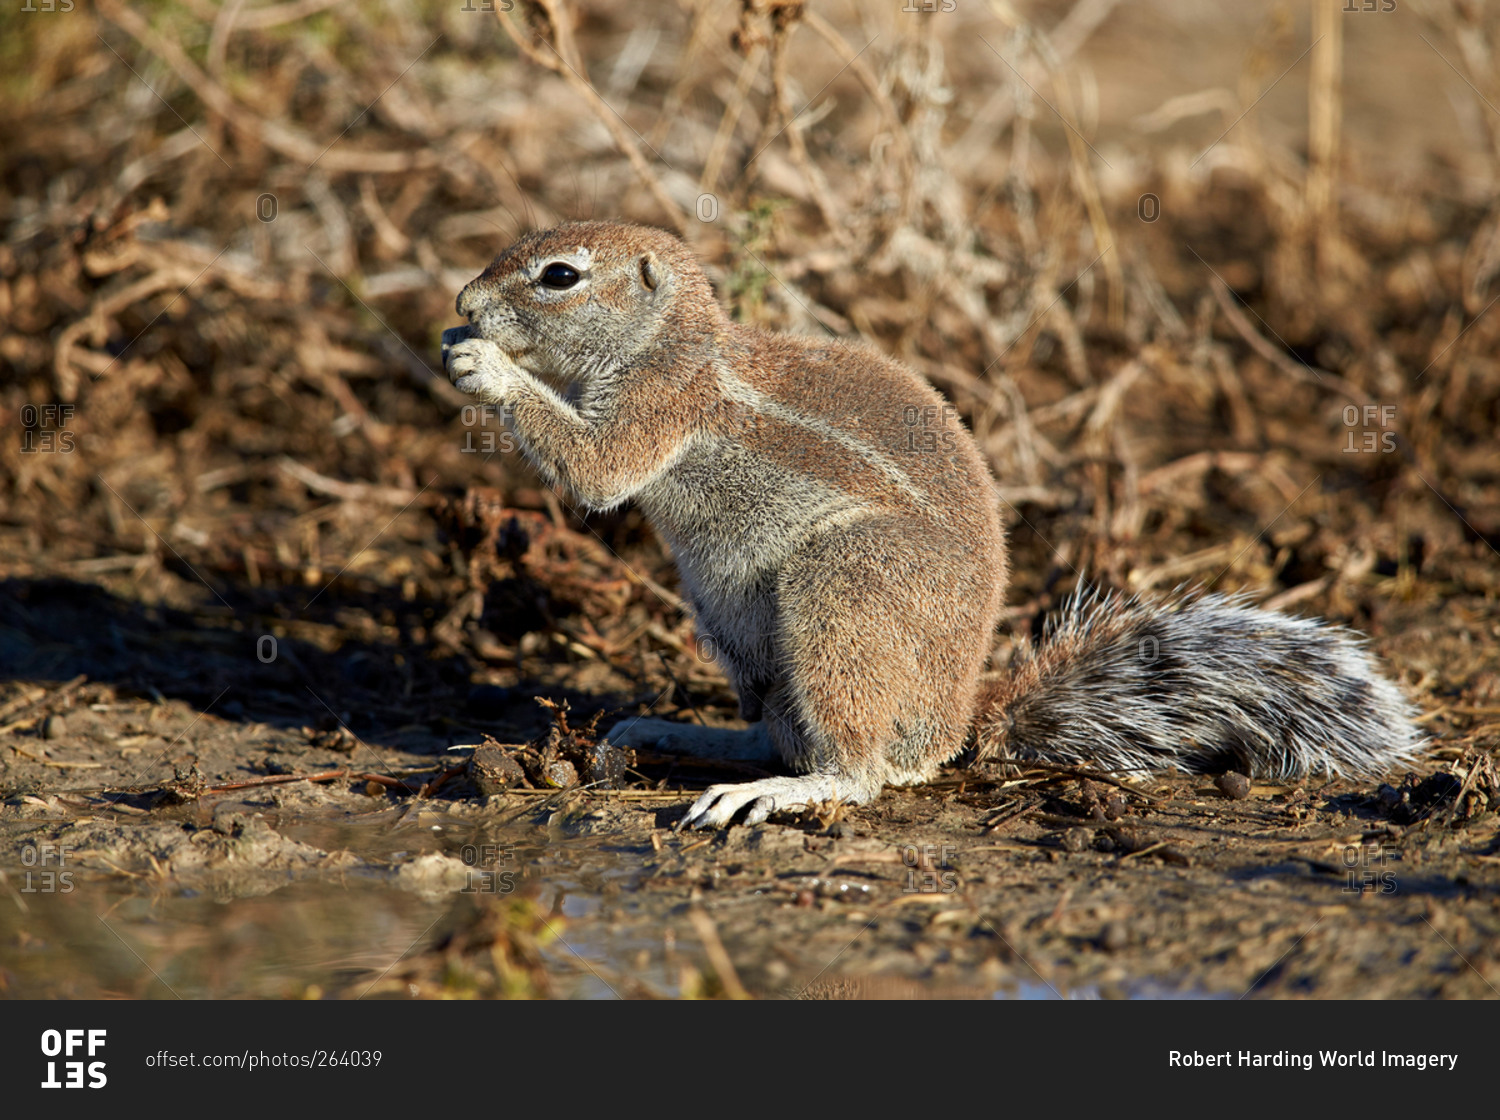 Cape Ground Squirrel (Xerus inauris) eating, Kgalagadi Transfrontier Park (encompassing the former Kalahari Gemsbok National Park), South Africa